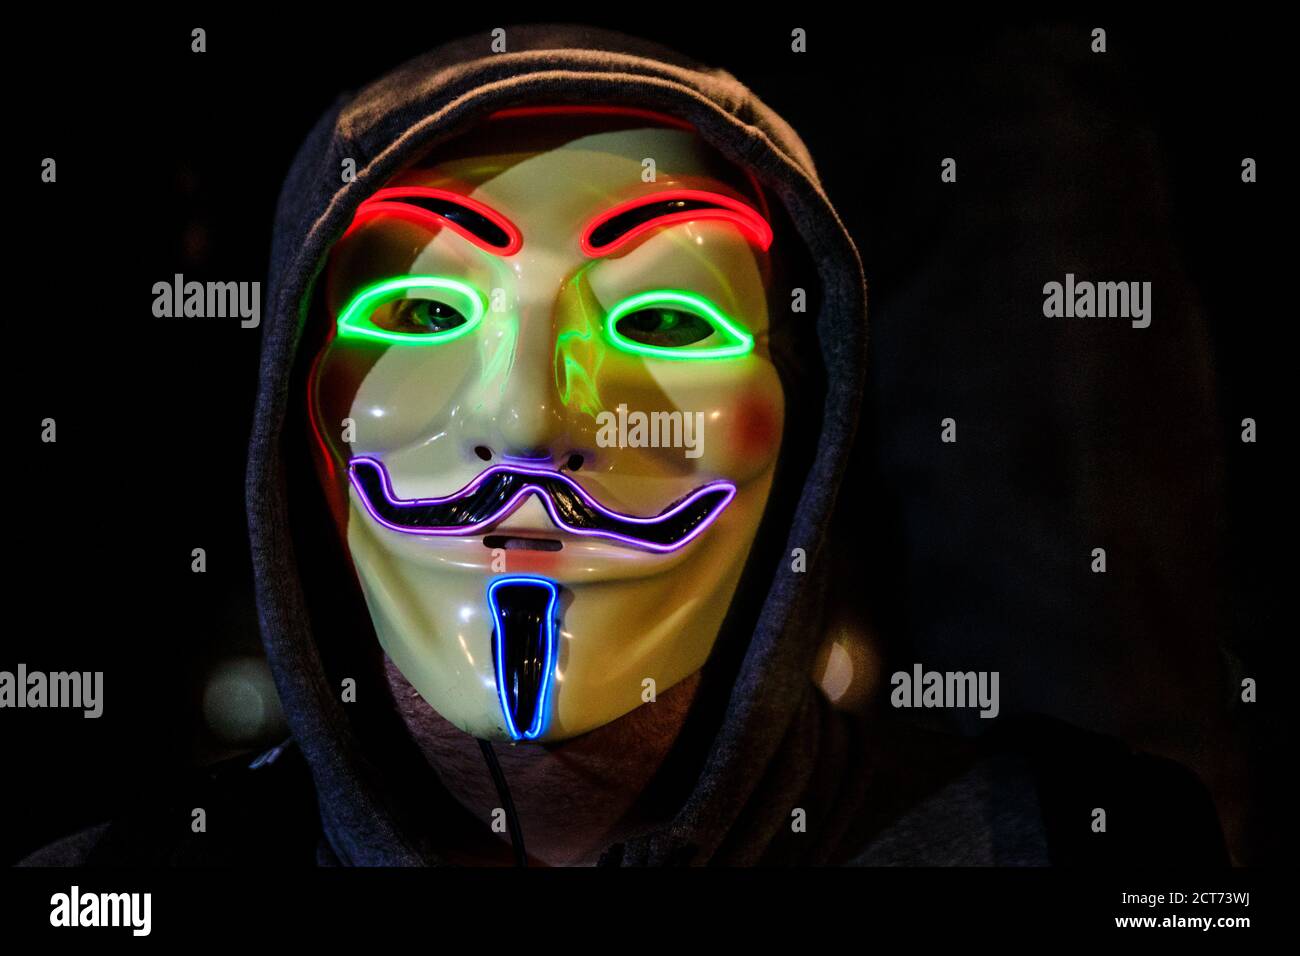 Attivista in maschera illuminata 'V or Vendetti' Guy Fawkes a Million Masks marzo dal gruppo hacktivist Anonymous, Guy Fawkes Day, Londra, UK Foto Stock